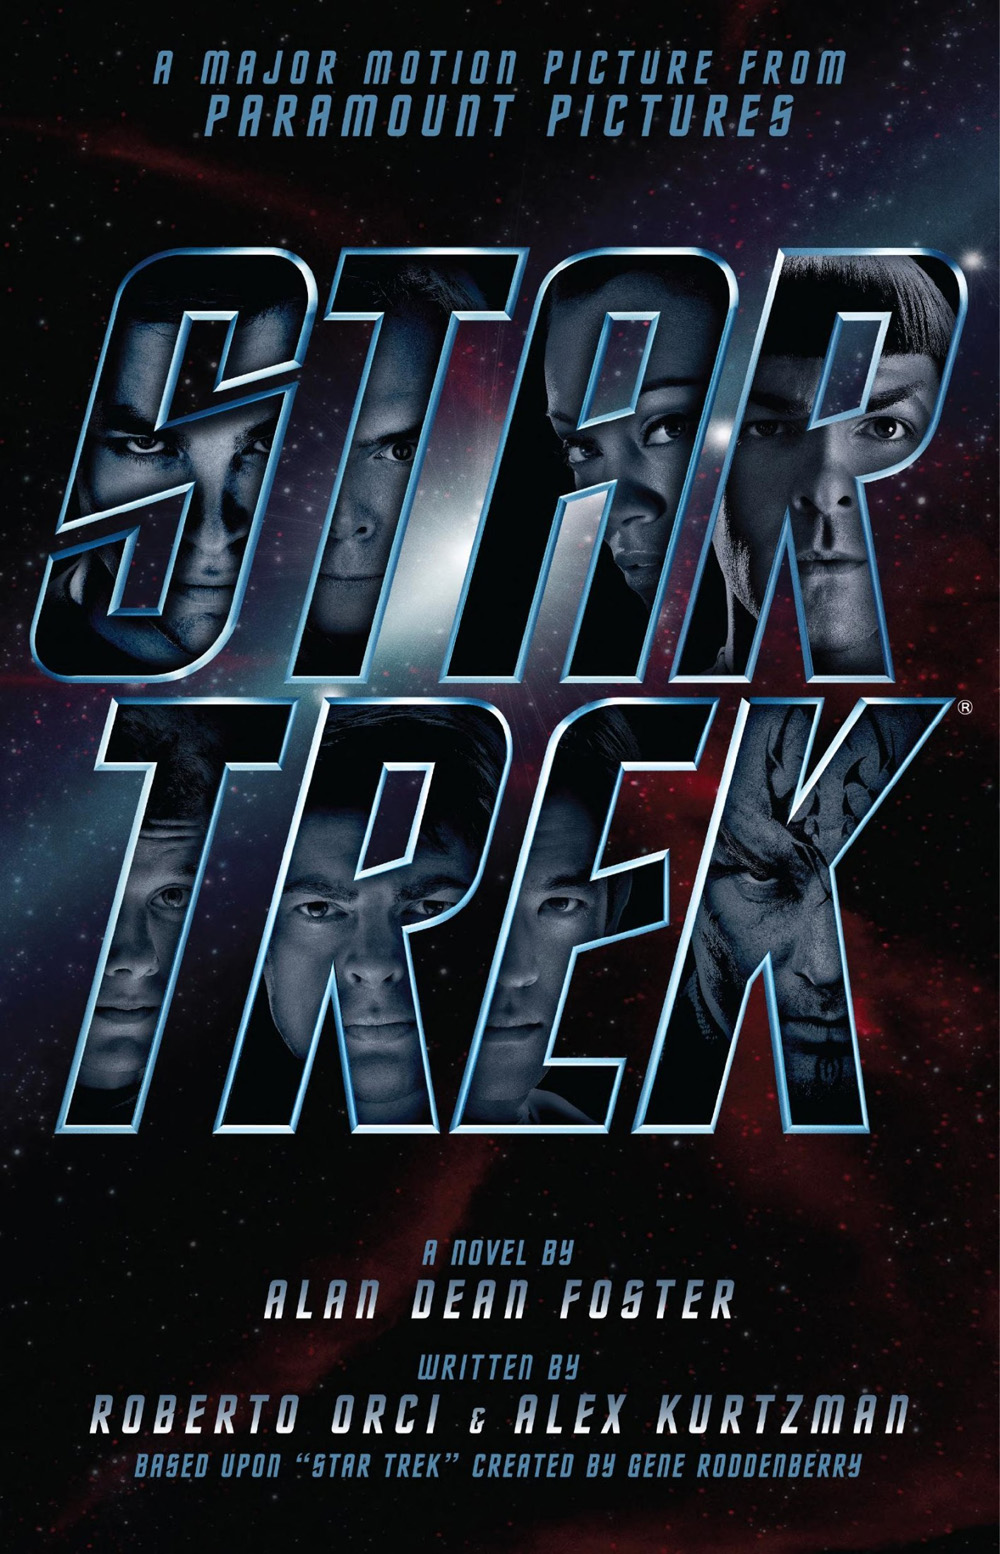 "Star Trek" Stardate 2258.42 Released: May 2009